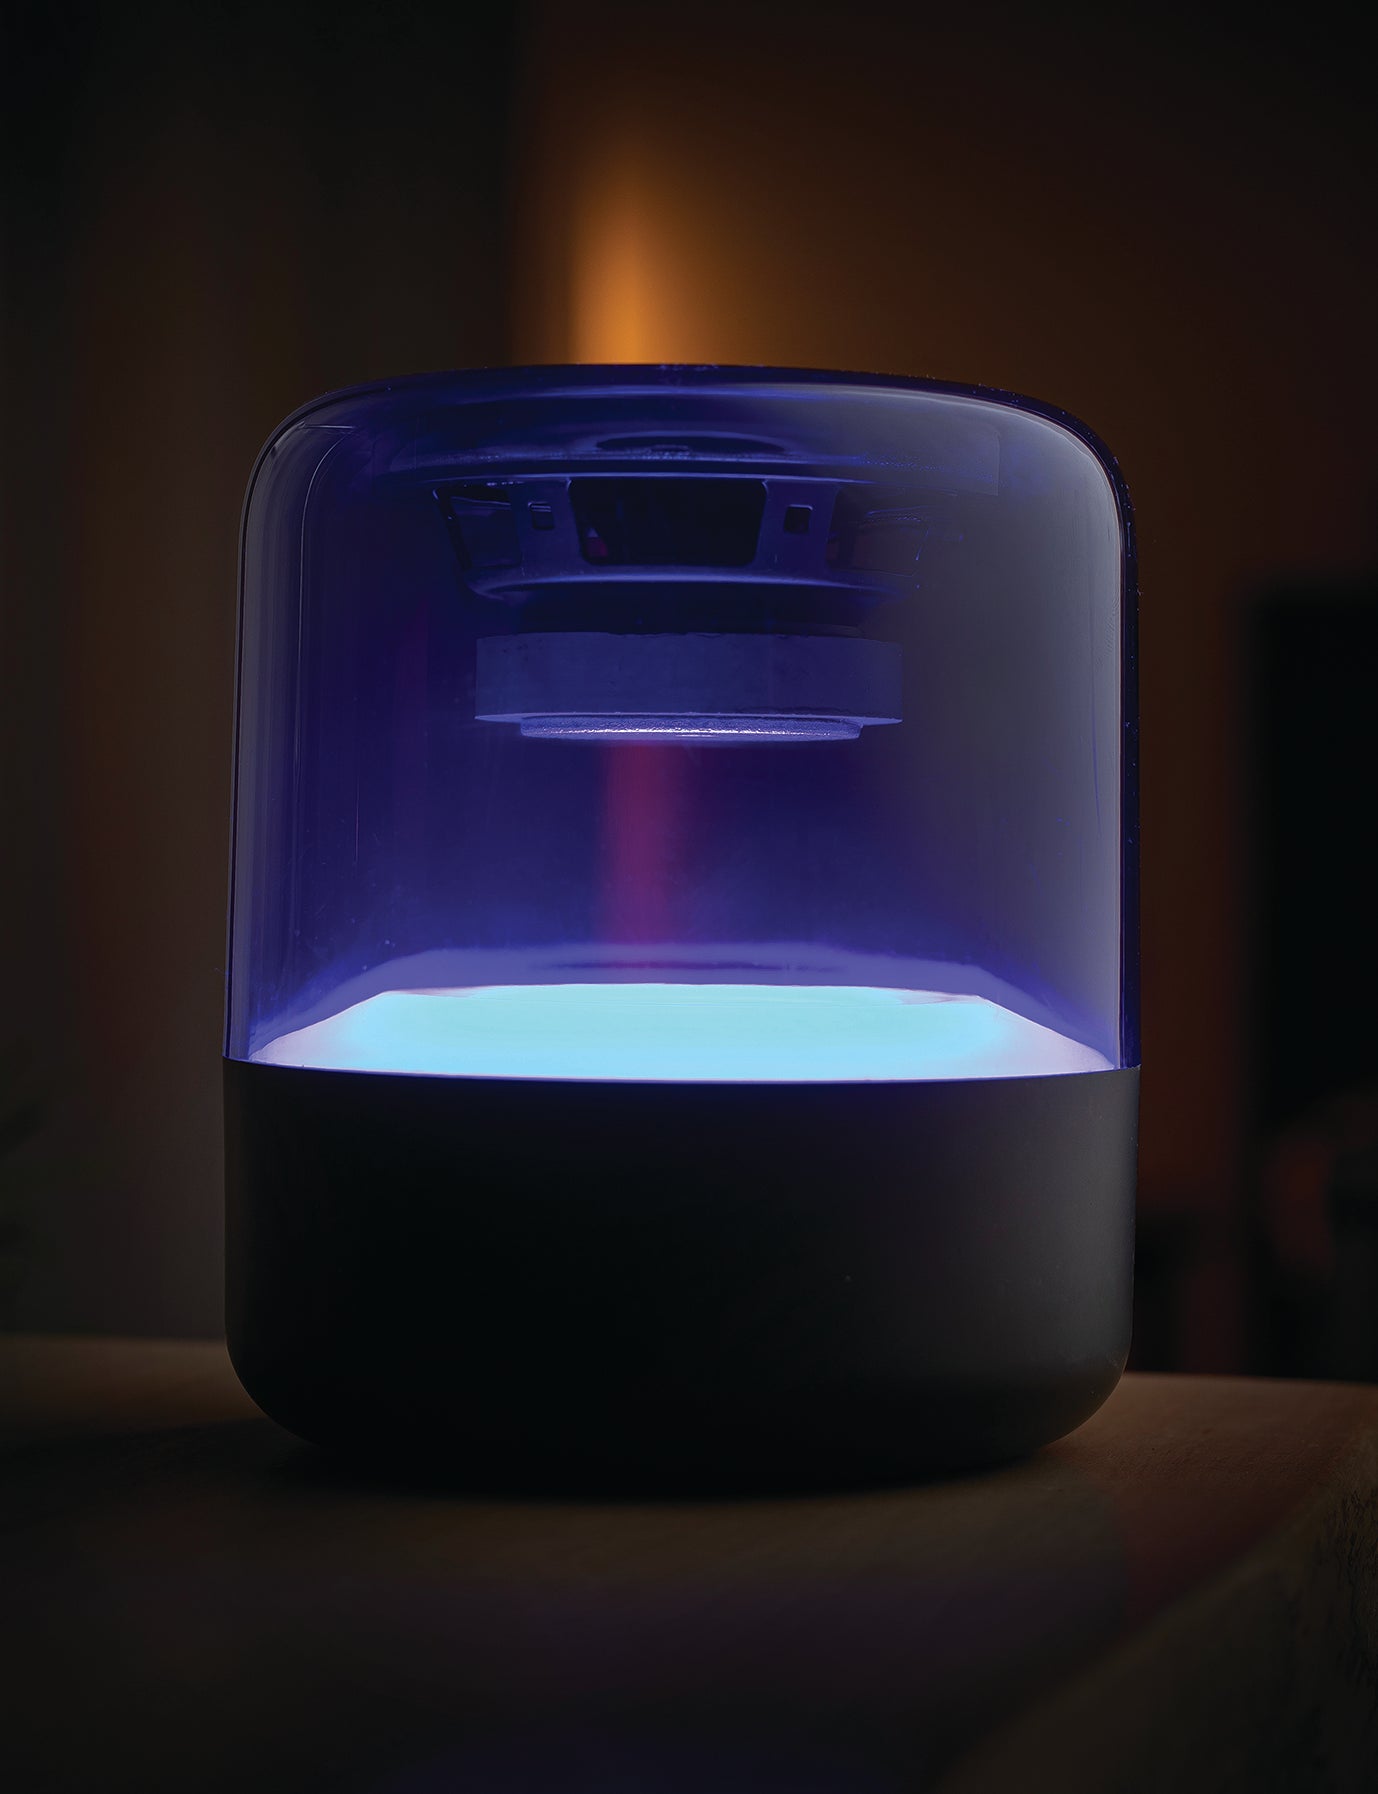 Lucid Dome LED Light-Up Bluetooth Speaker